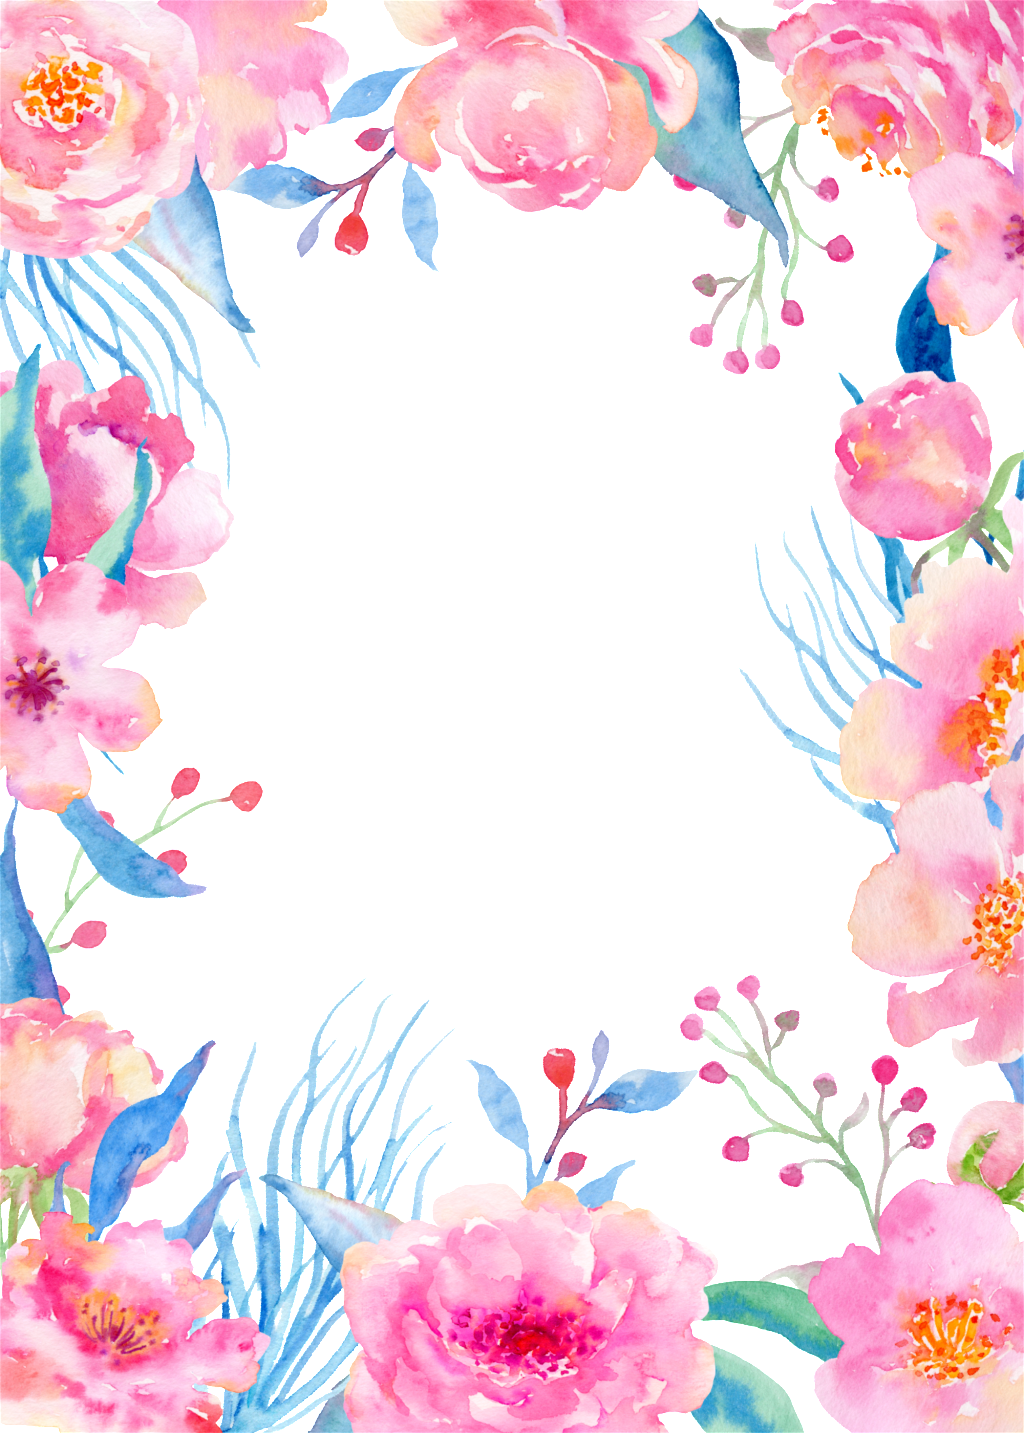 Download Transparent Background Flower Border PNG Image with No Background  